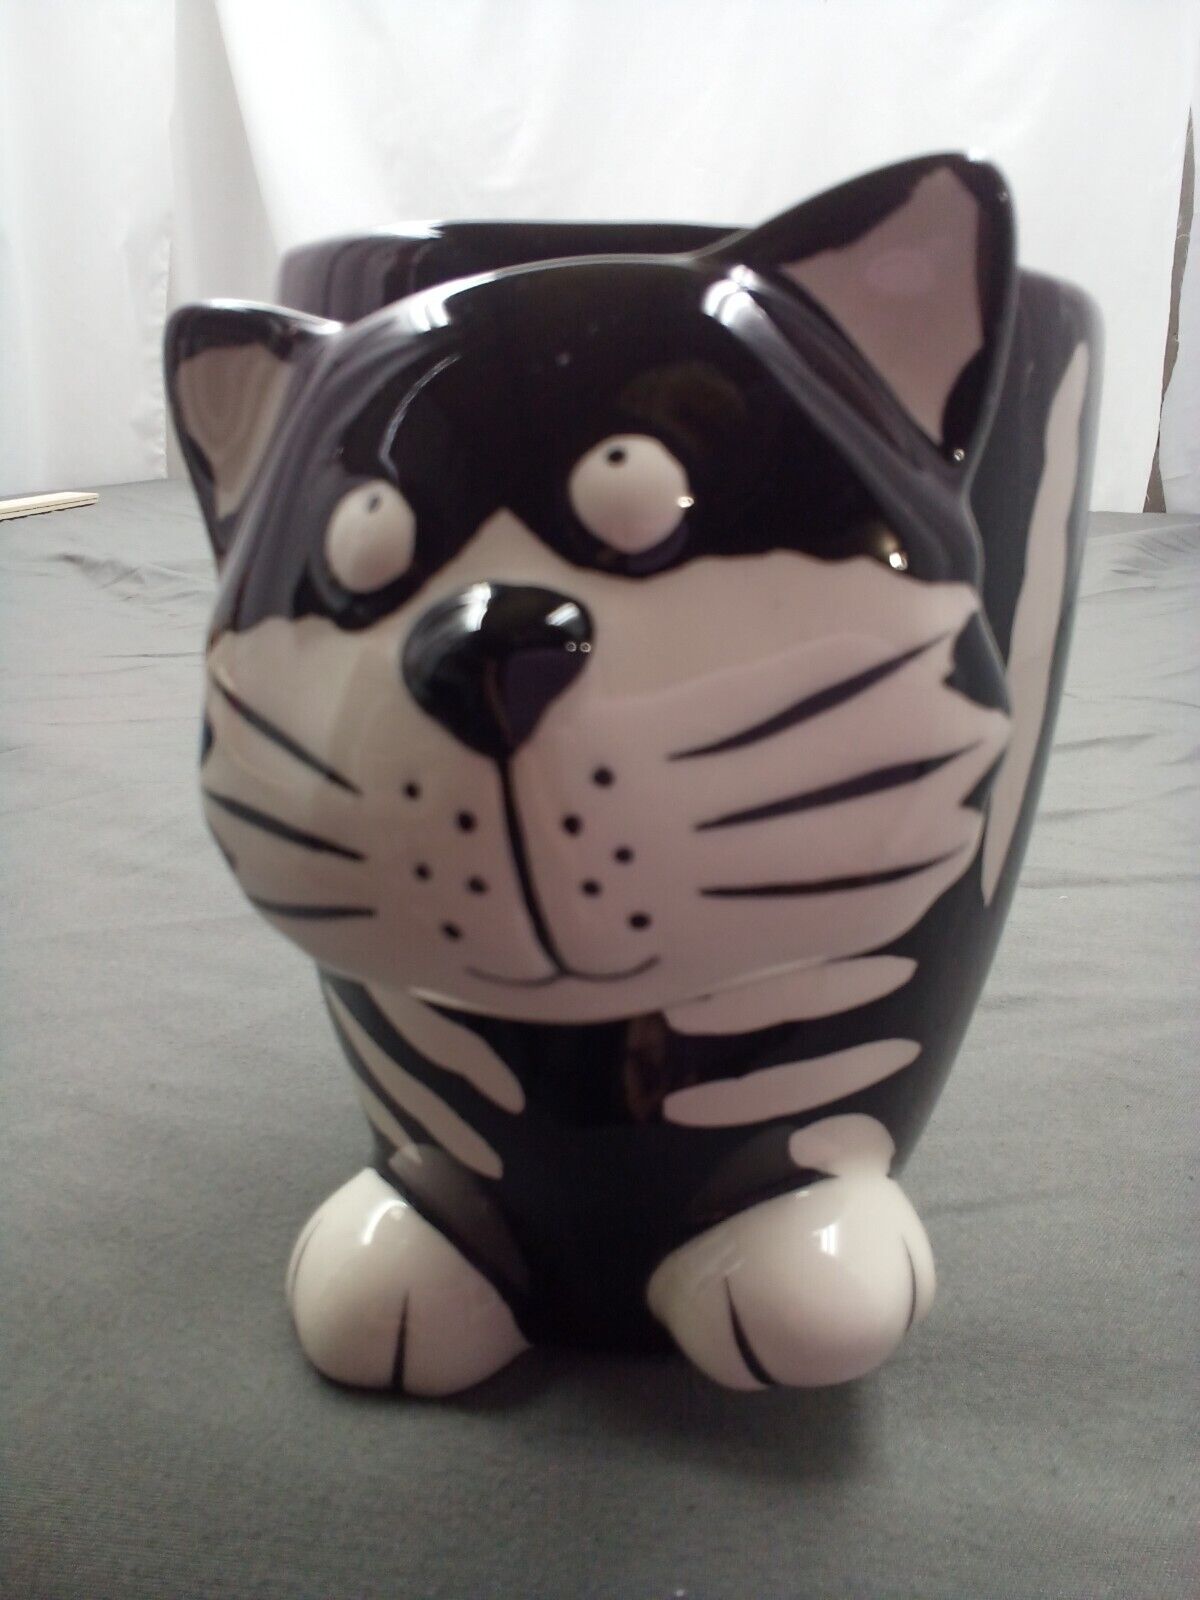 burton & Burton Chester The Cat Mug Cup Black and White 3D 2005 4 inch